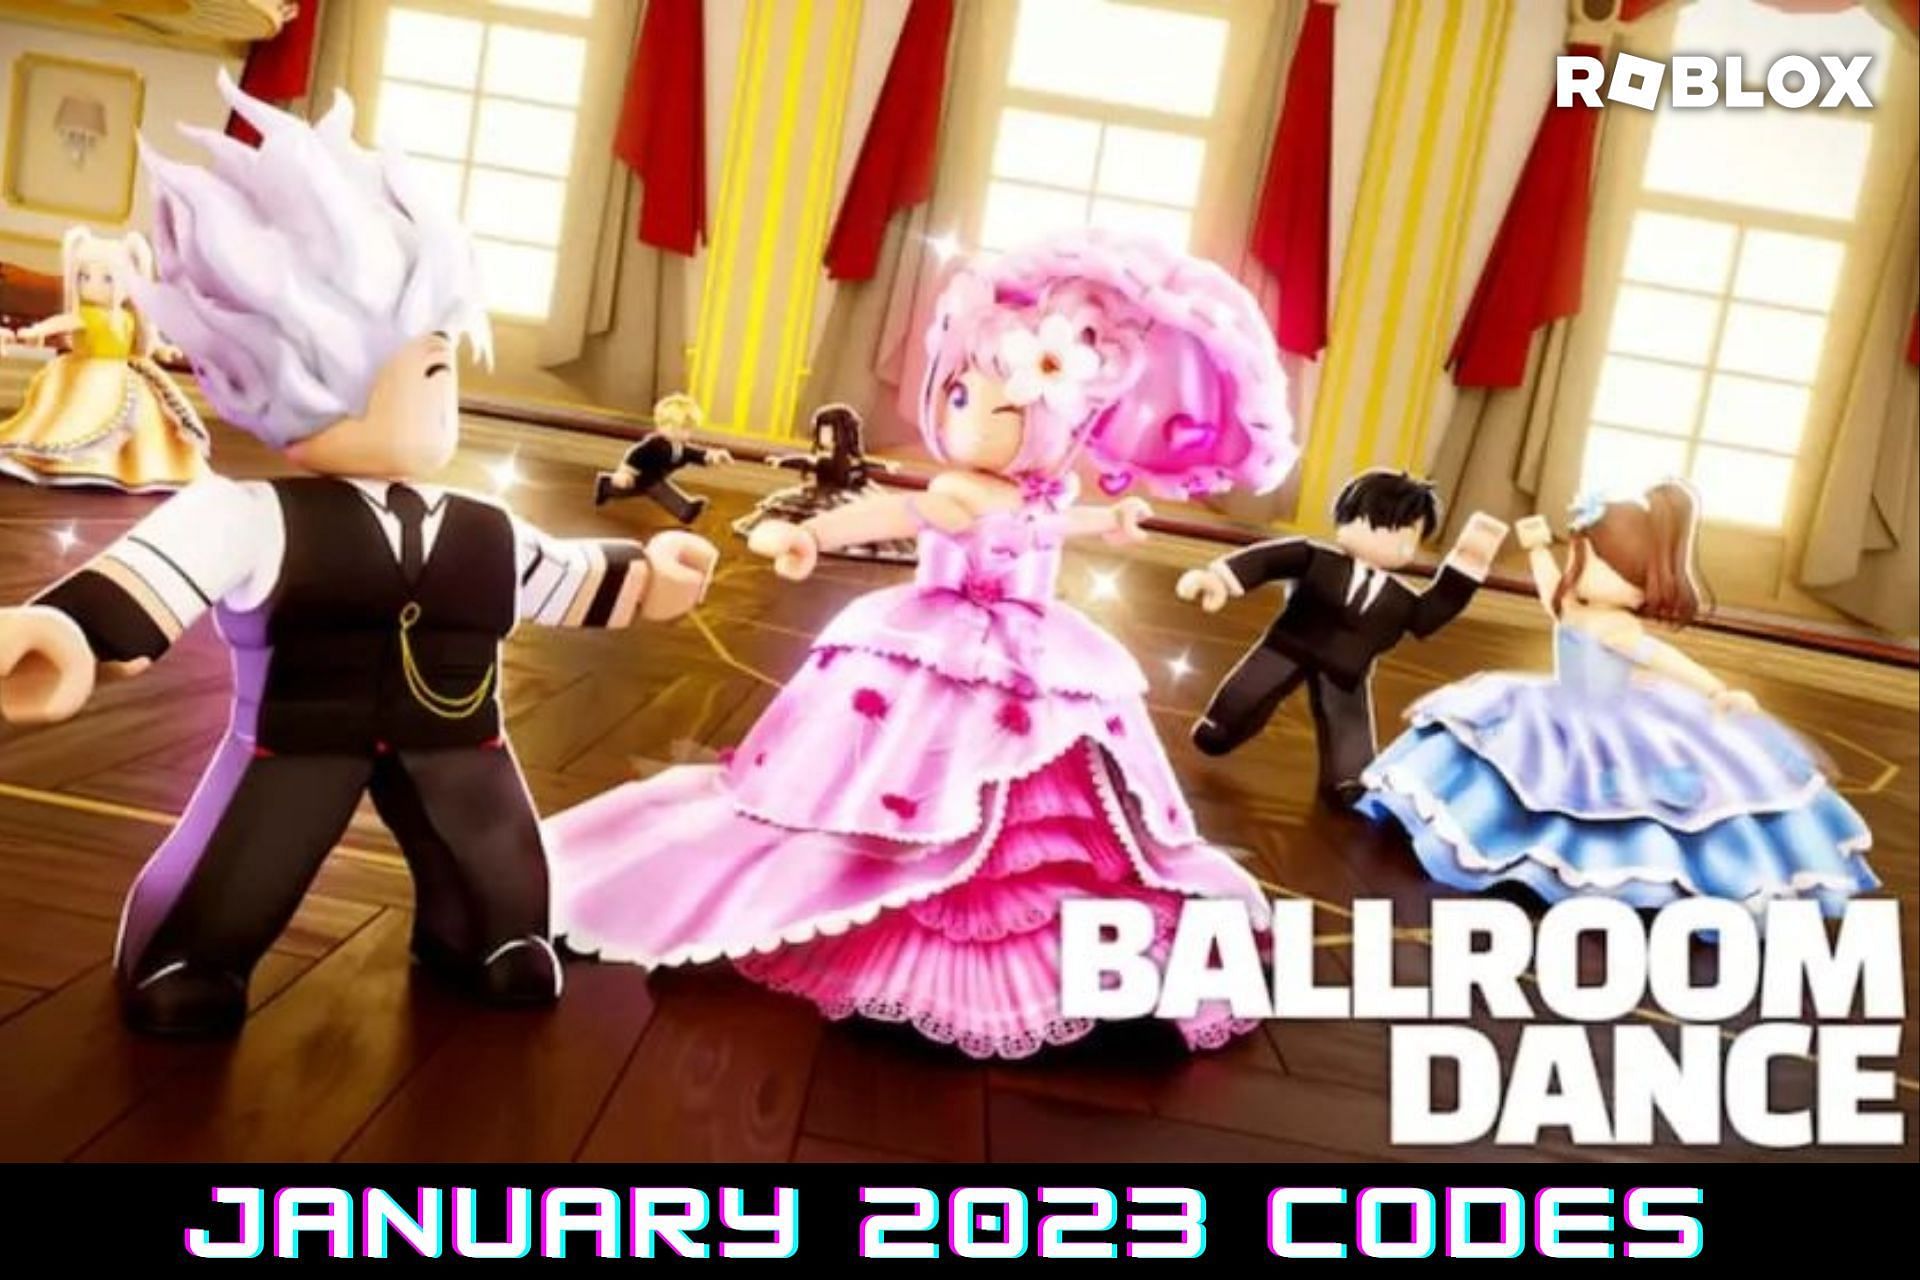 Roblox Ballroom Dance Codes for January 2023: Free gems